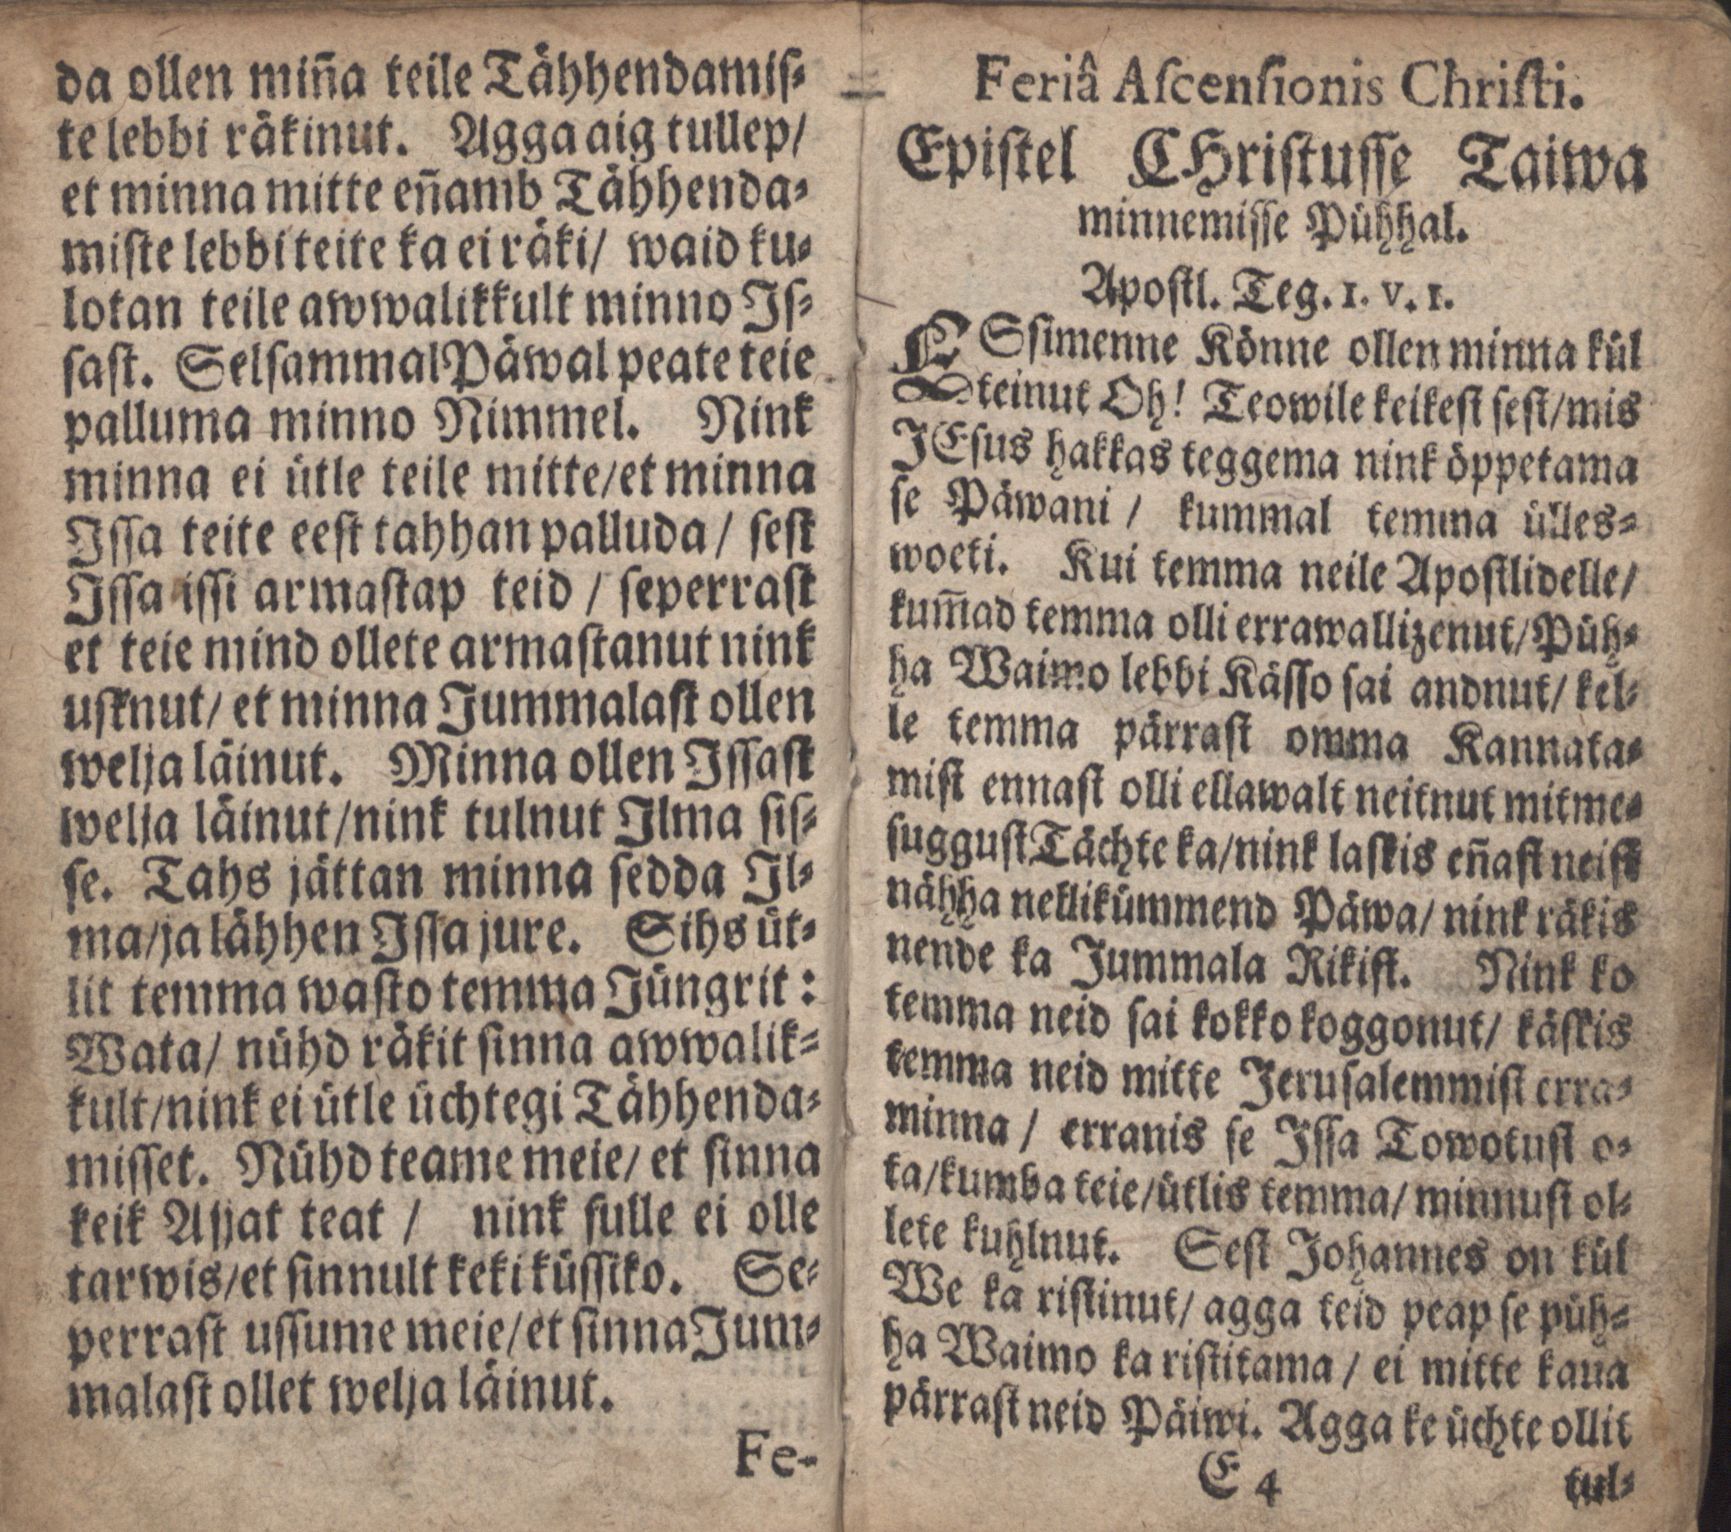 Ma Kele Koddo- nink Kirko-Ramat (1700) | 97. Main body of text